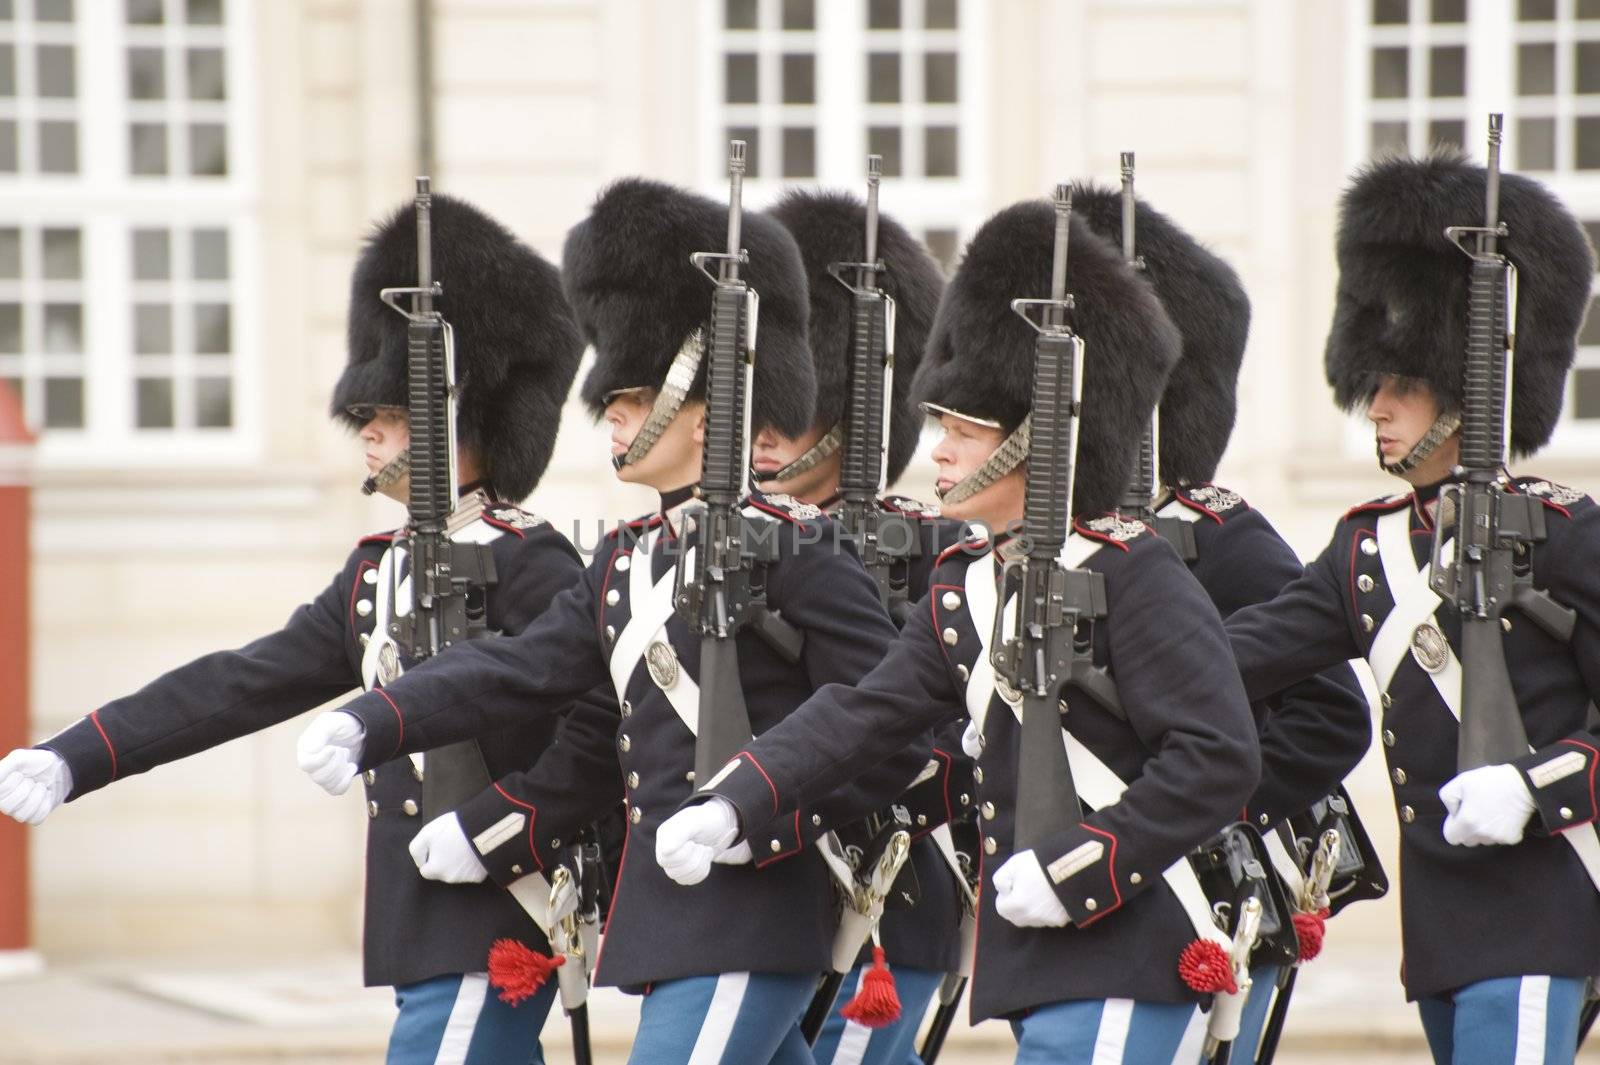 Denmark Royal guard by Alenmax